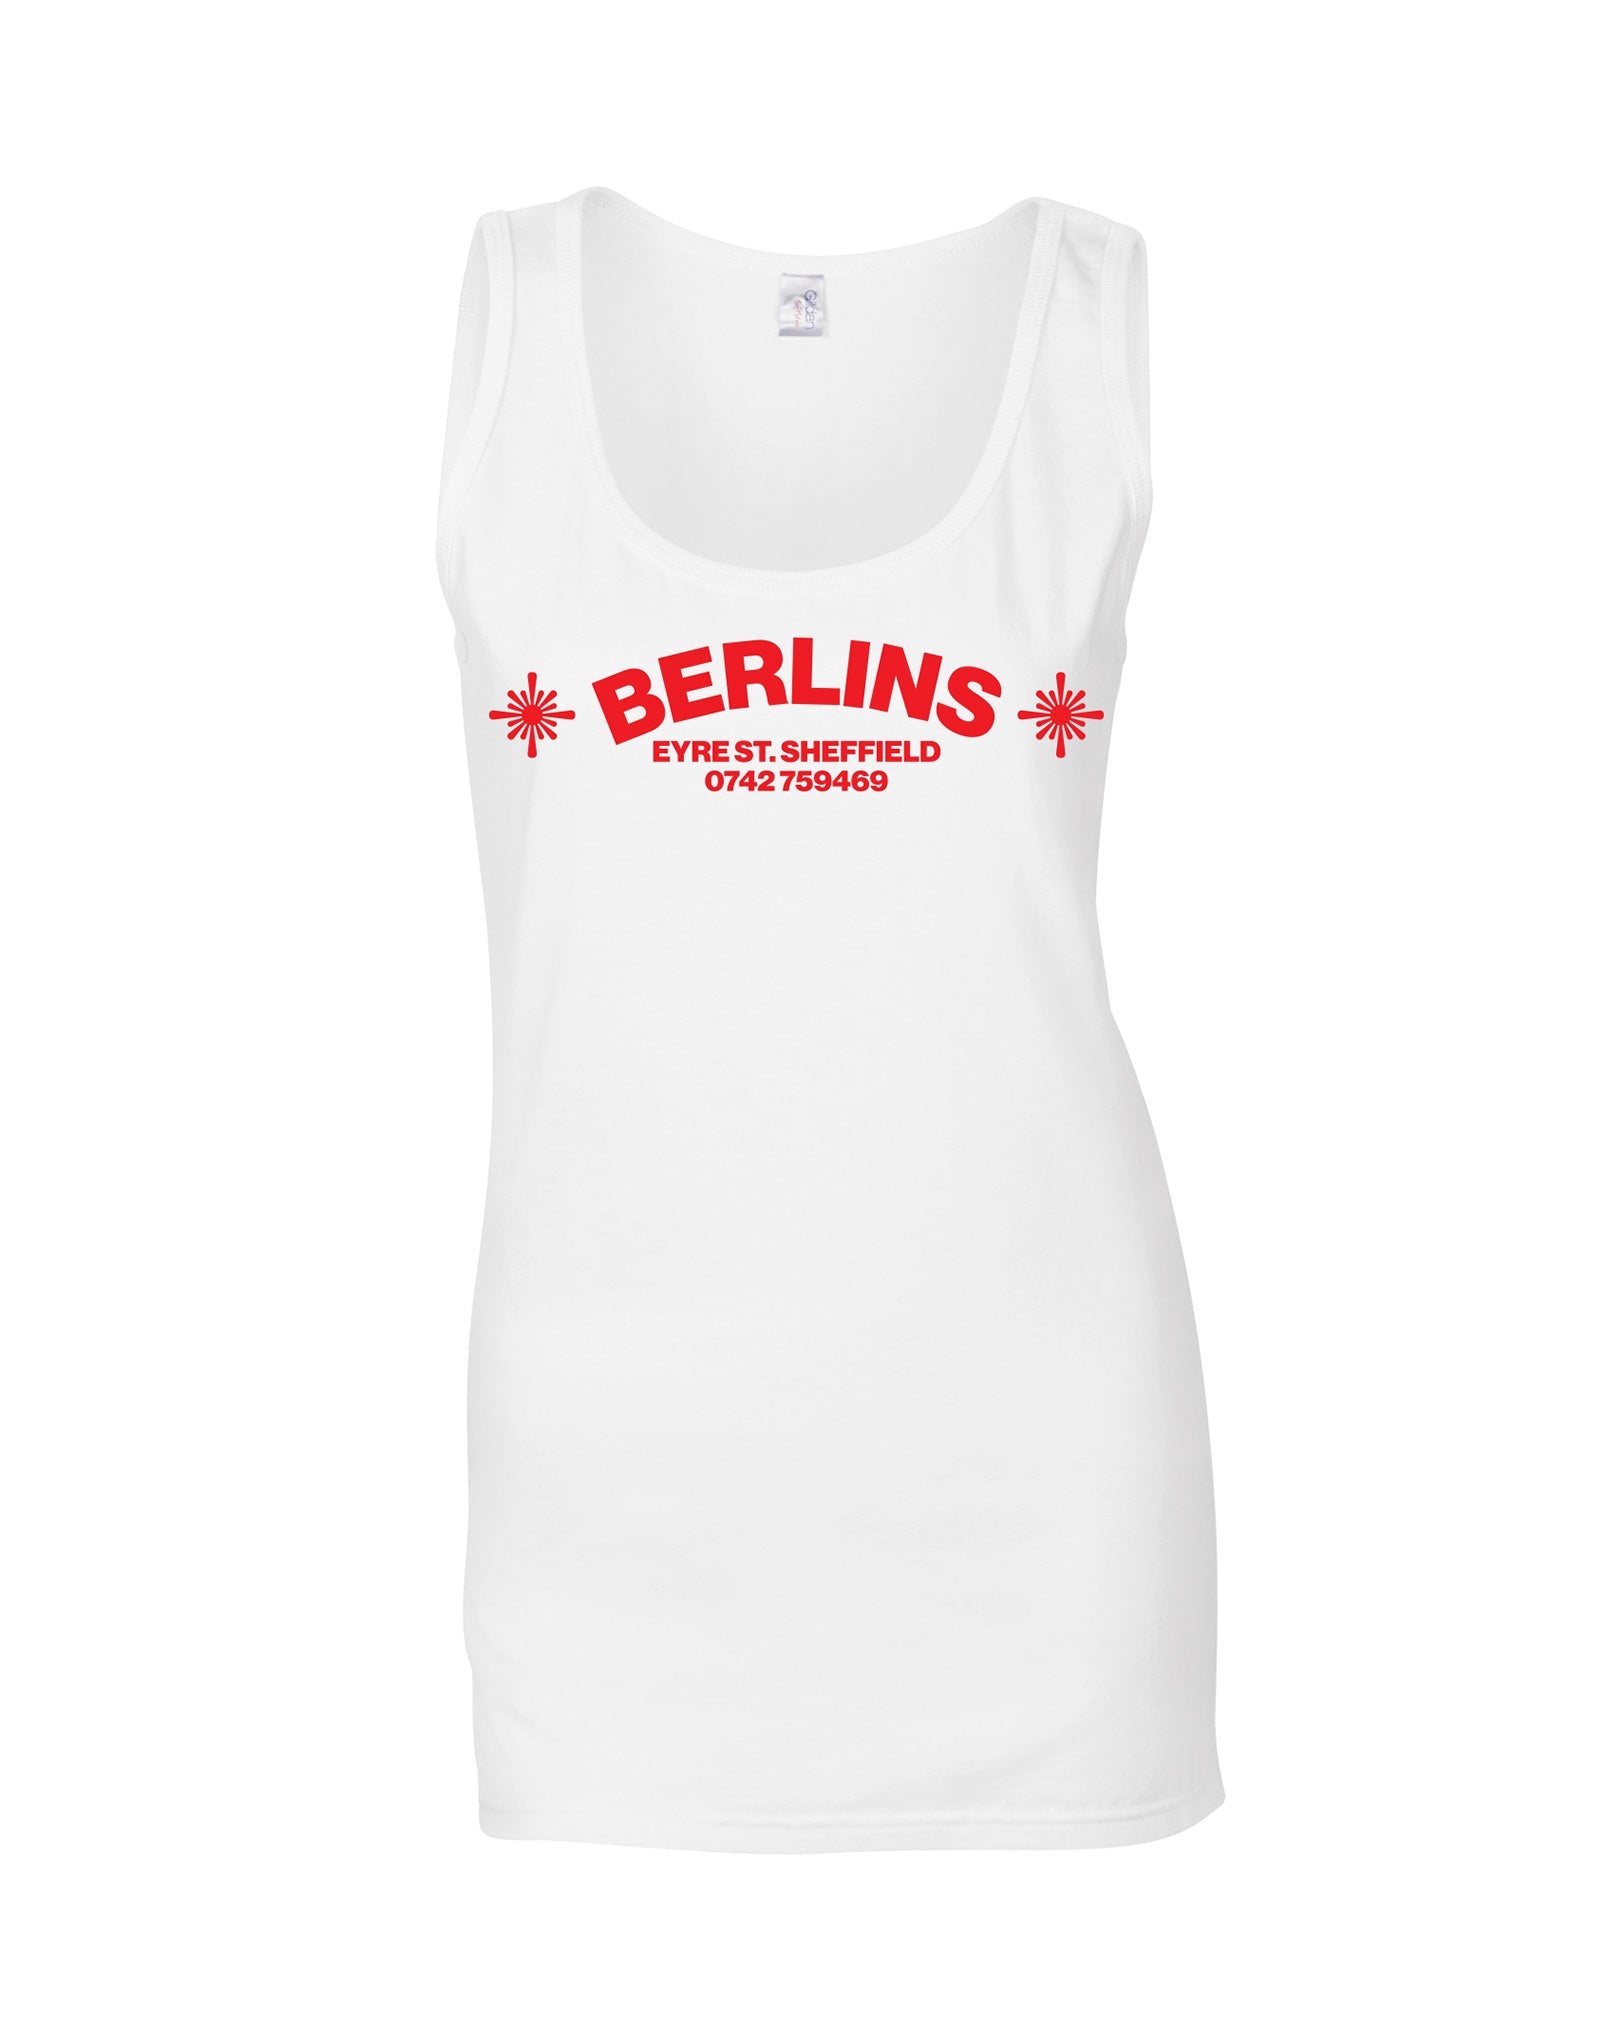 Berlins ladies fit vest - various colours - Dirty Stop Outs